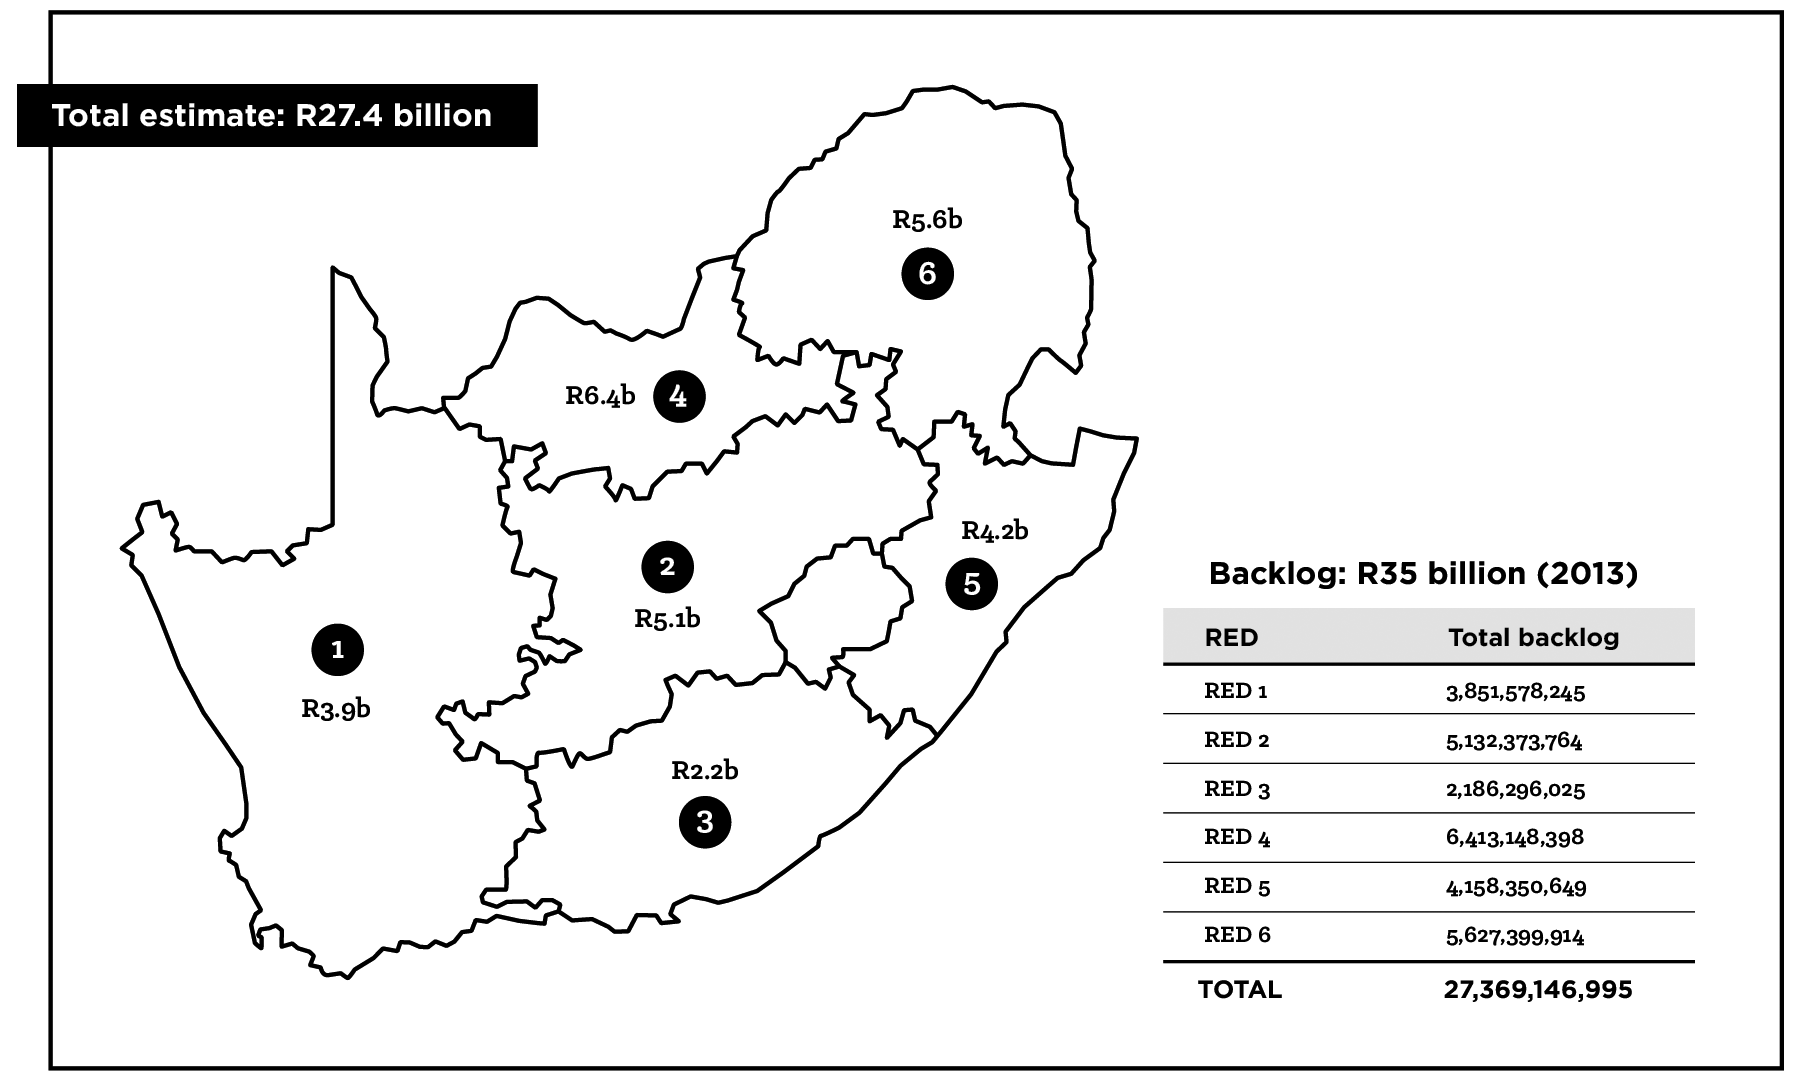 Figure 5.10: Estimated Refursbishment and Maintenance Backlog of the EDI in 2008